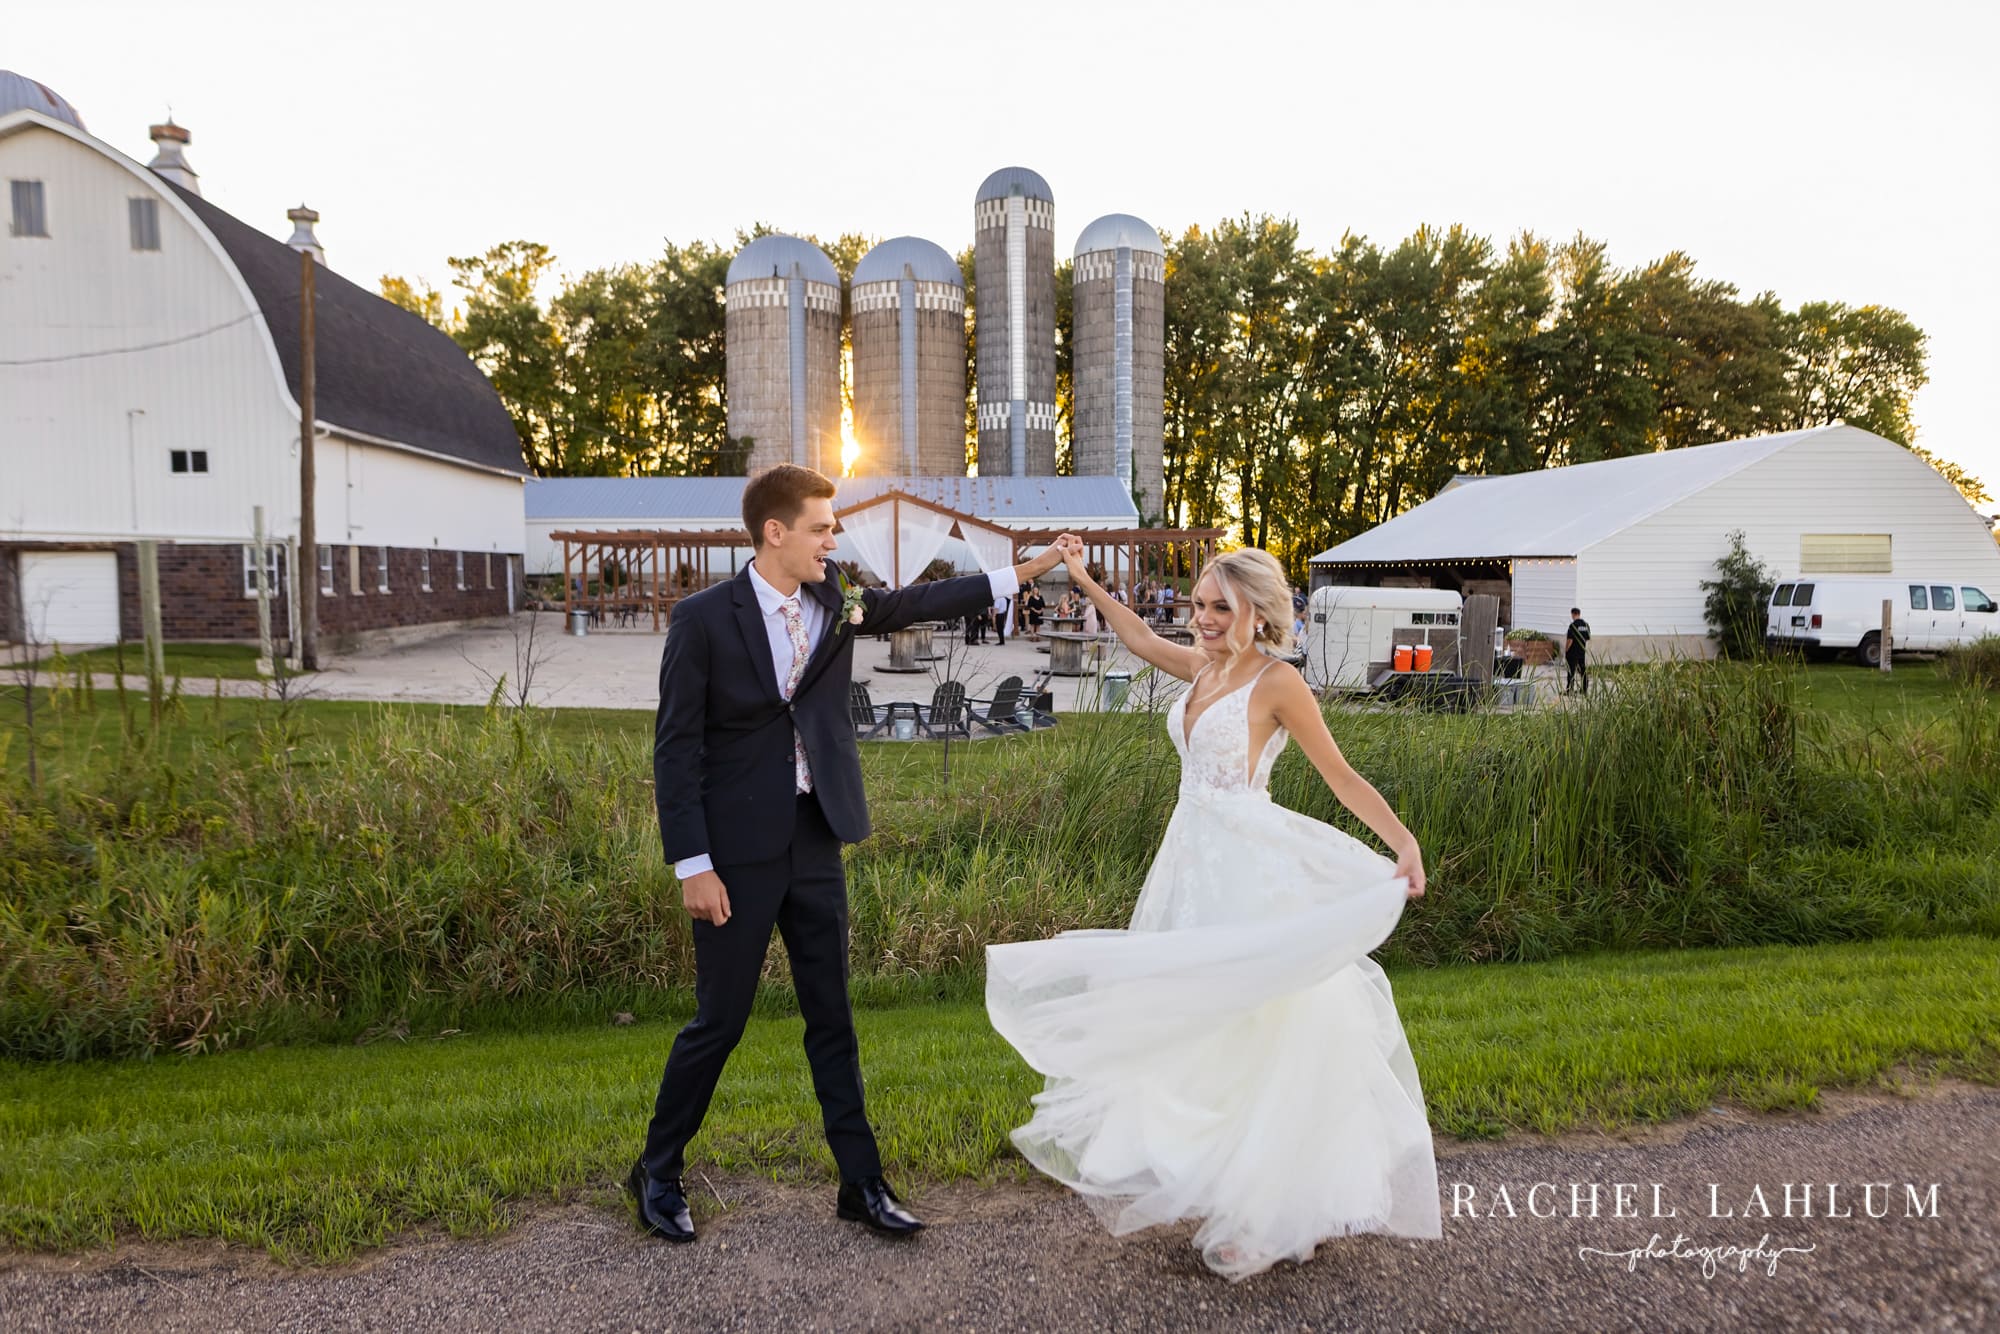 Groom twirls bride in front of the Cottage Farmhouse in Glencoe, Minnesota.